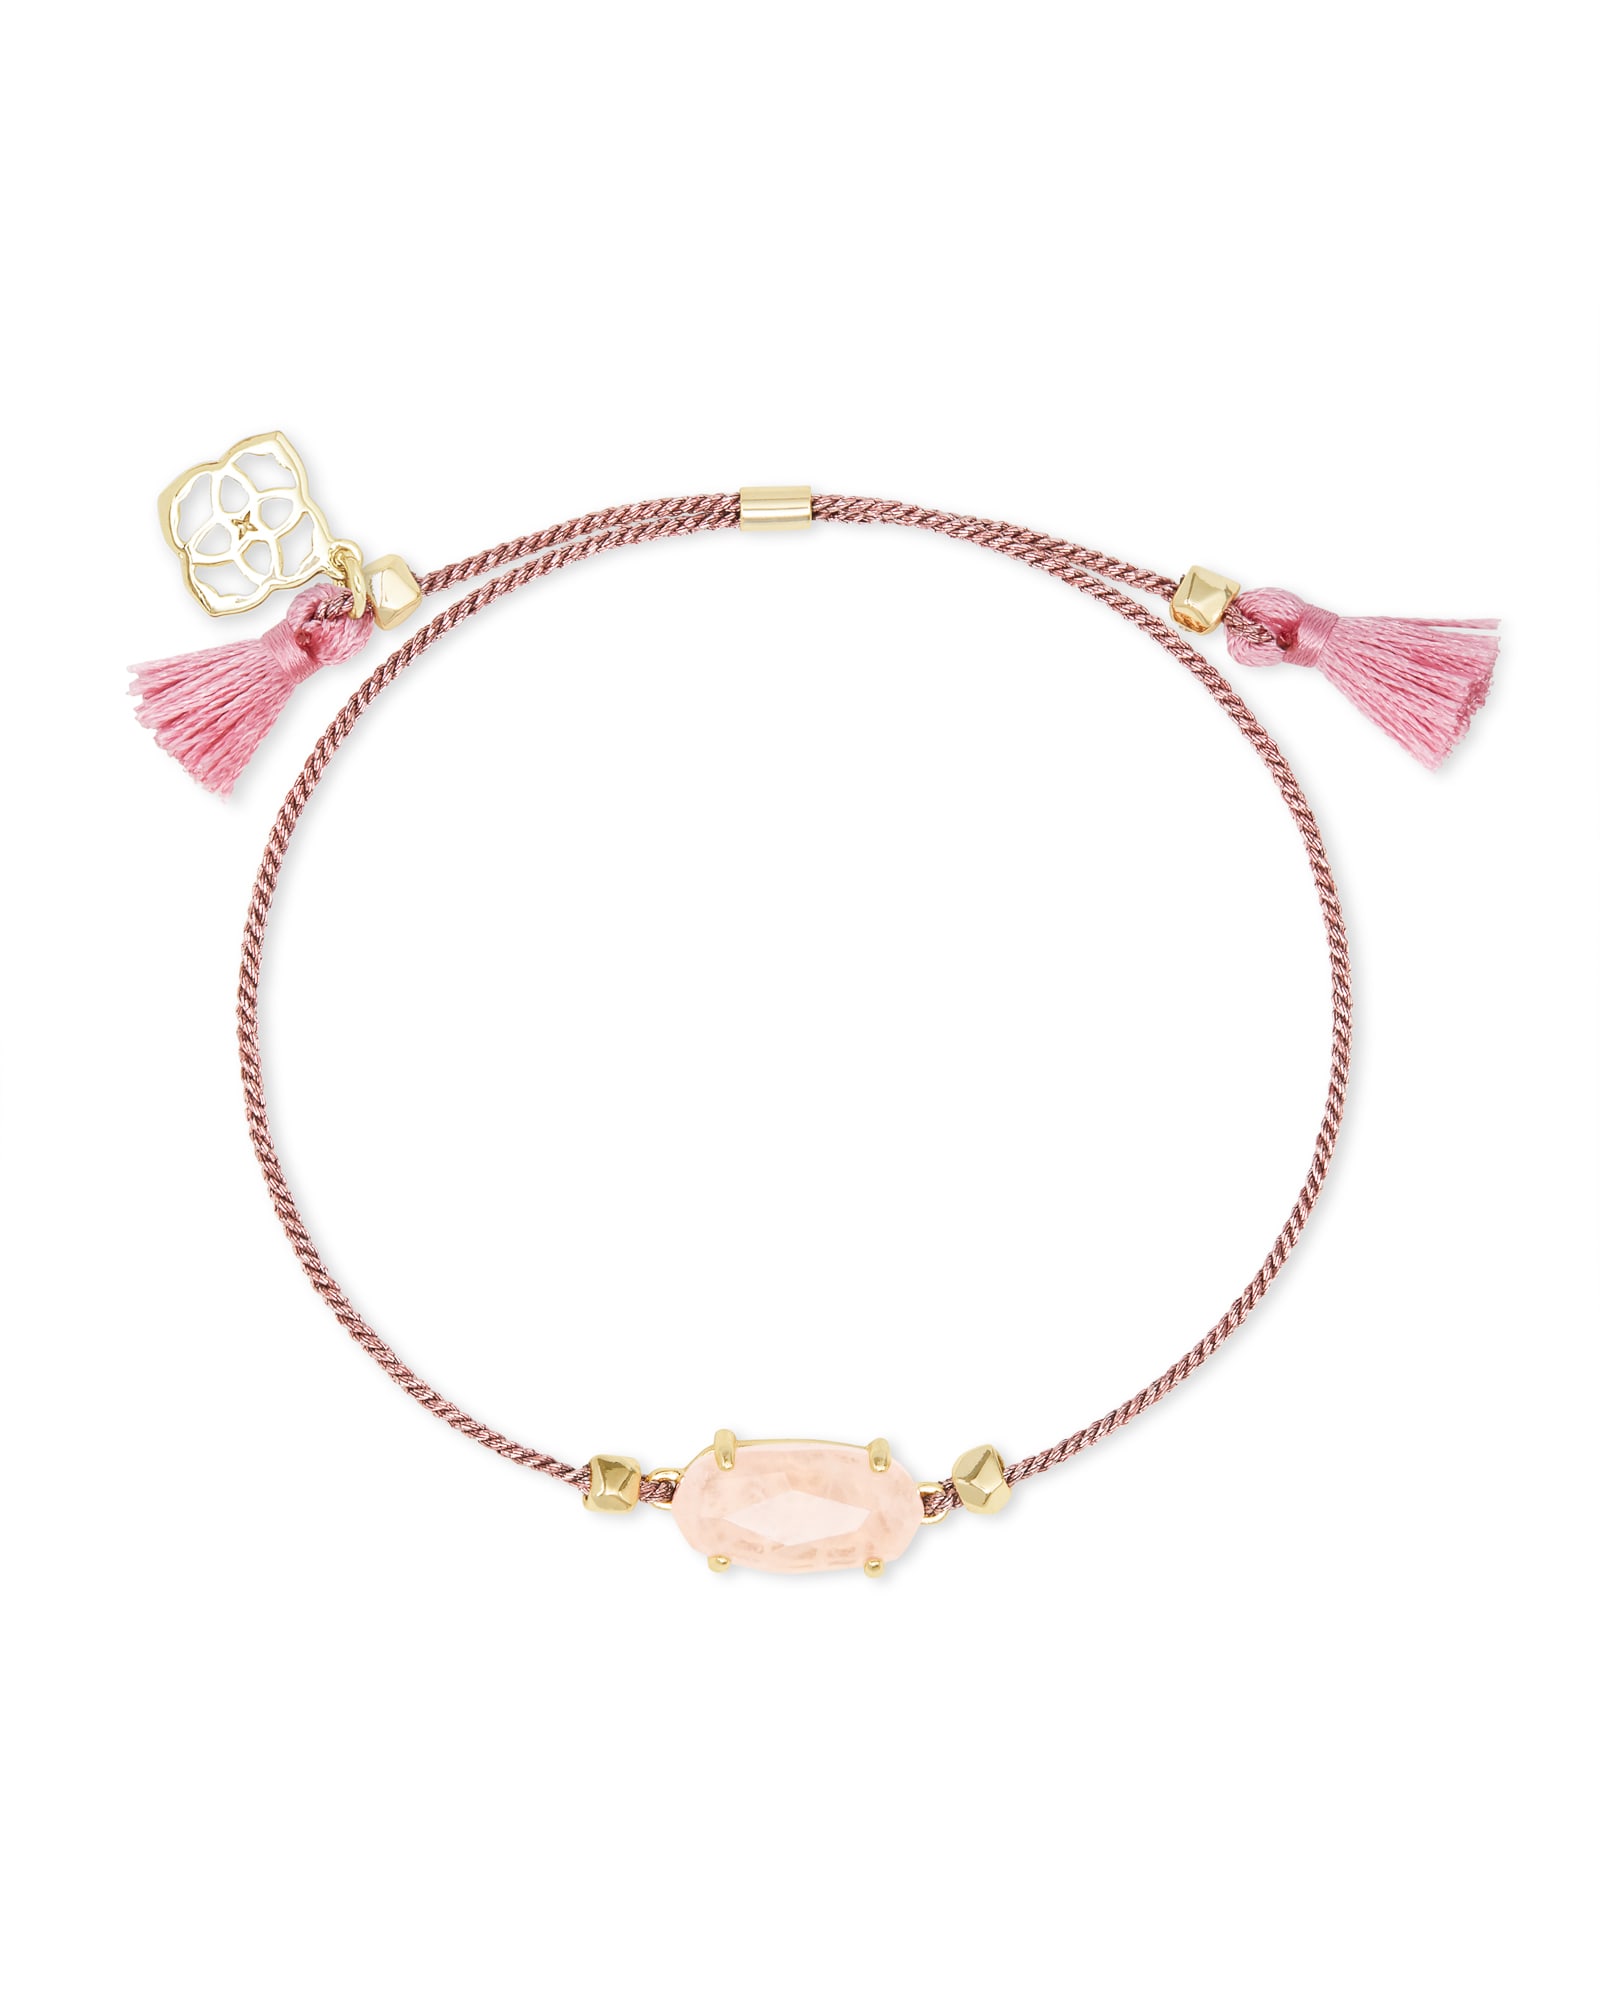 Kendra Scott Everlyne Pink Cord Friendship Bracelet in Rose | Quartz